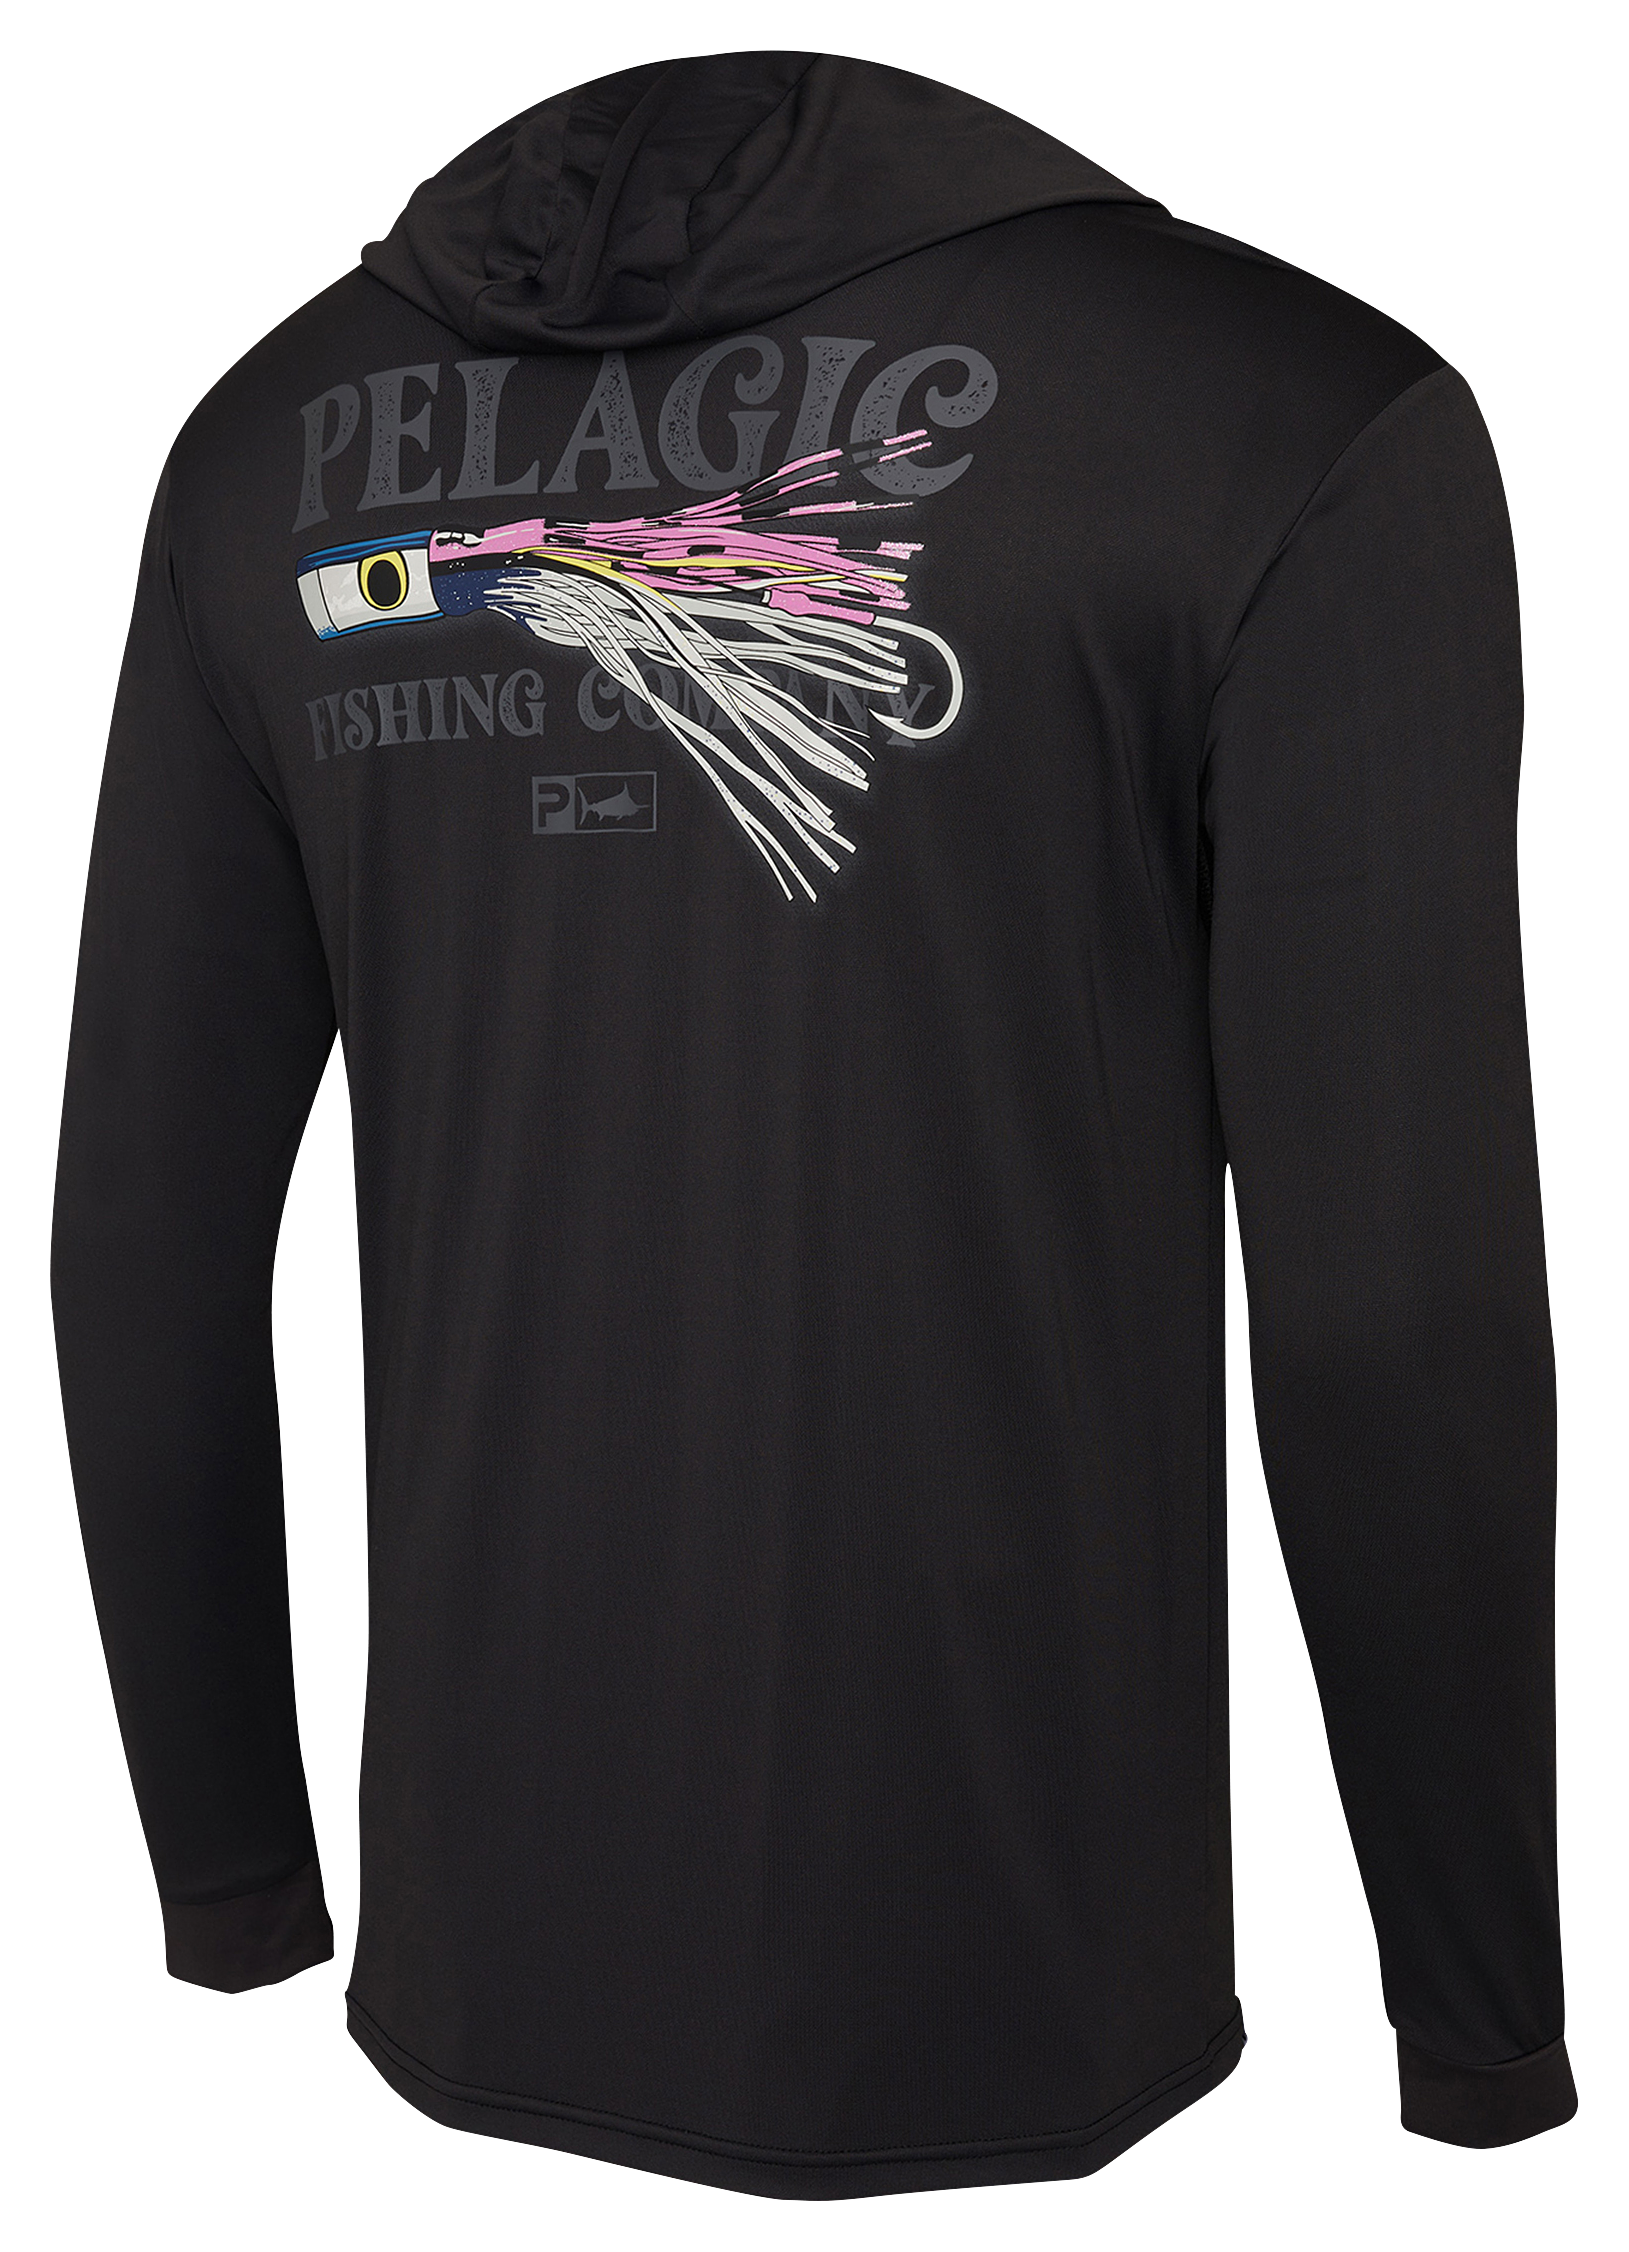 Pelagic Aquatek Lured Hooded Long-Sleeve Shirt for Men - Black/Lured - M